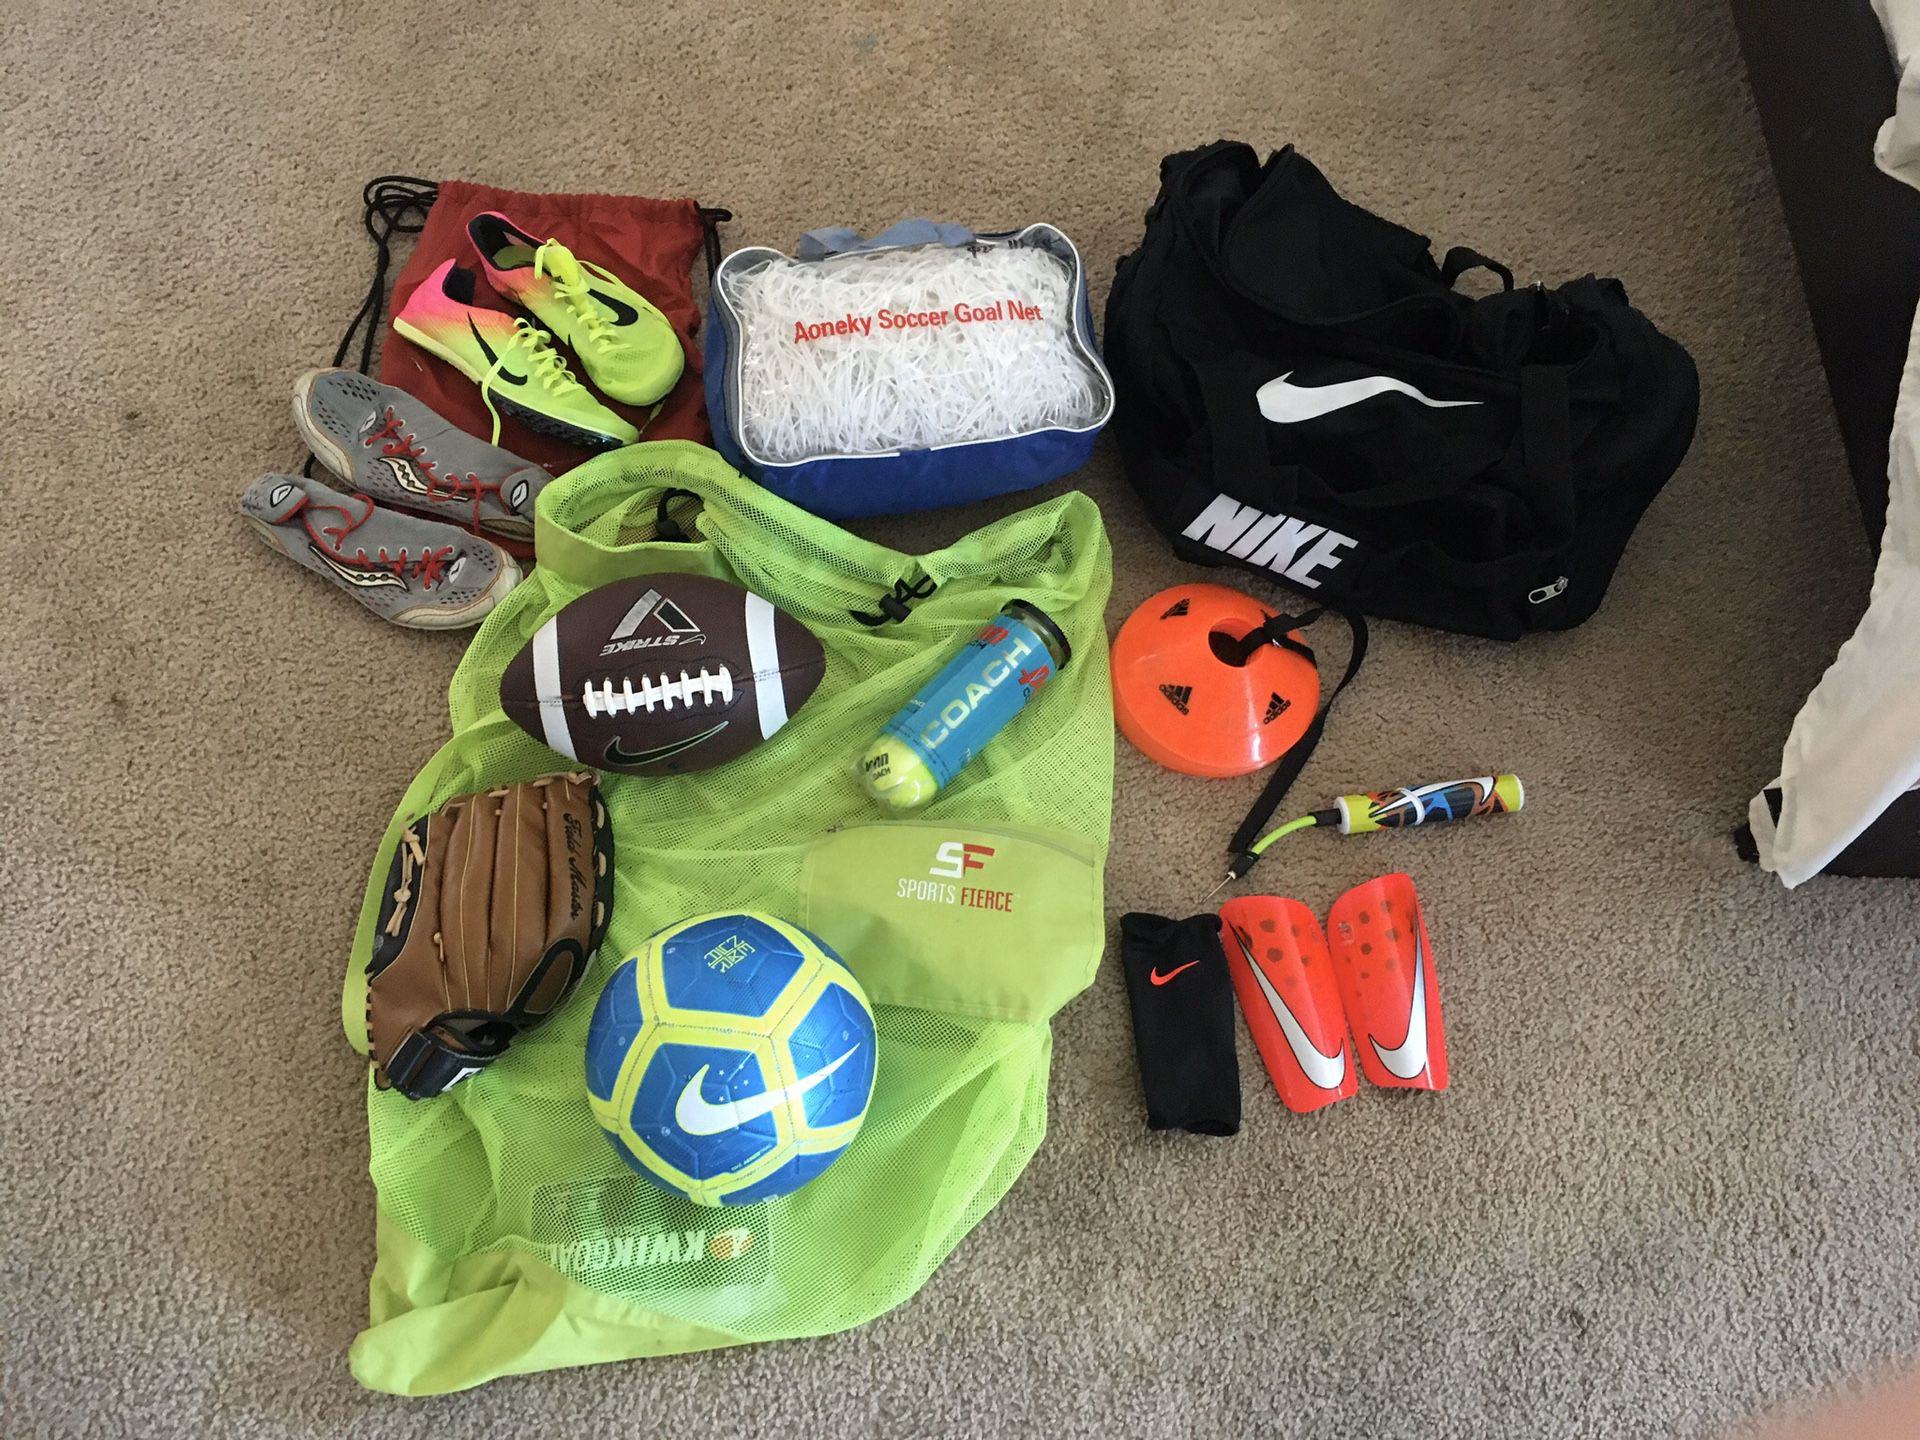 Football , Soccer Goal Net ($100 New) , Track spikes (sz10), baseball glove